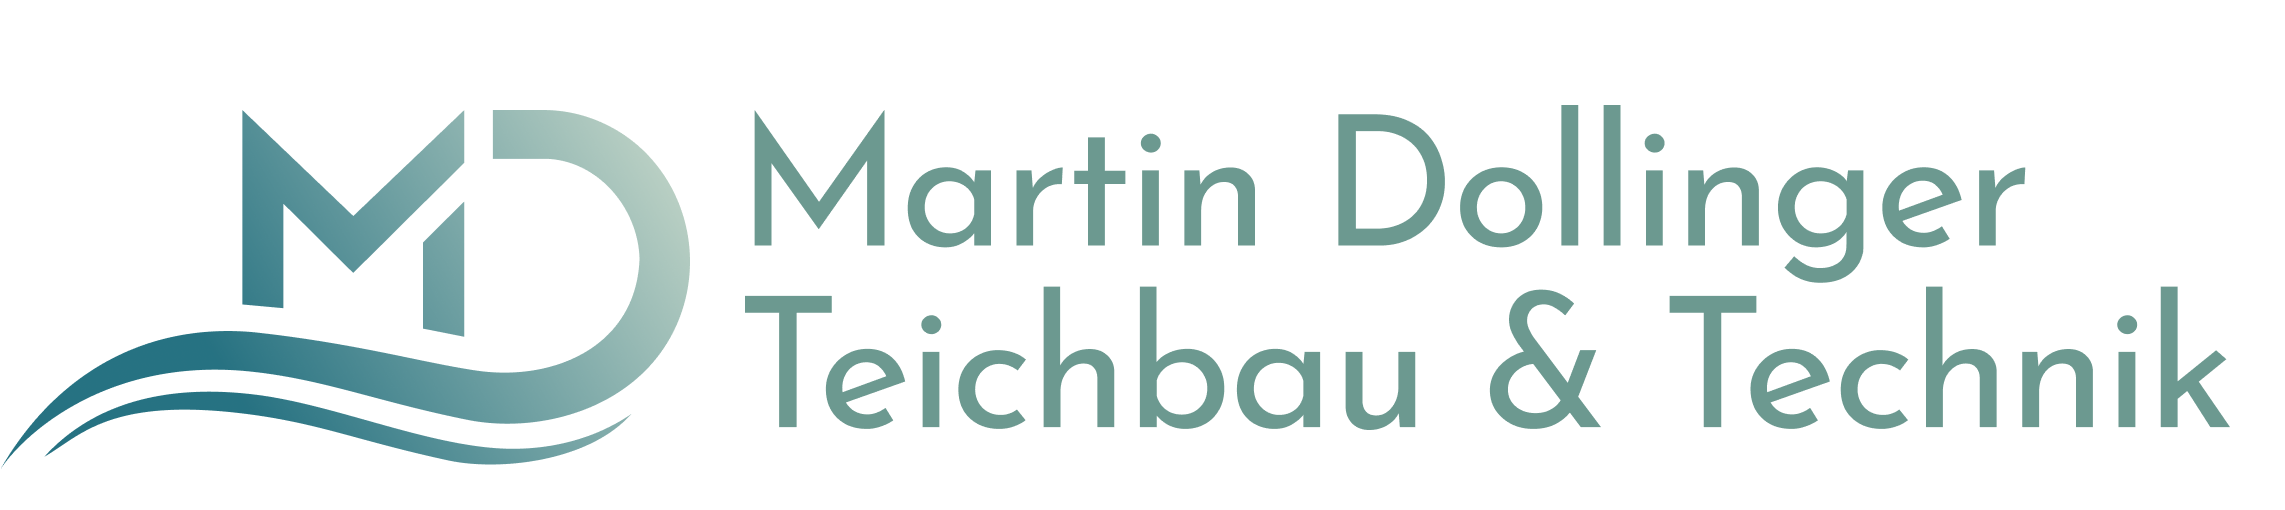 Martin Dollinger  Teichbau & Technik